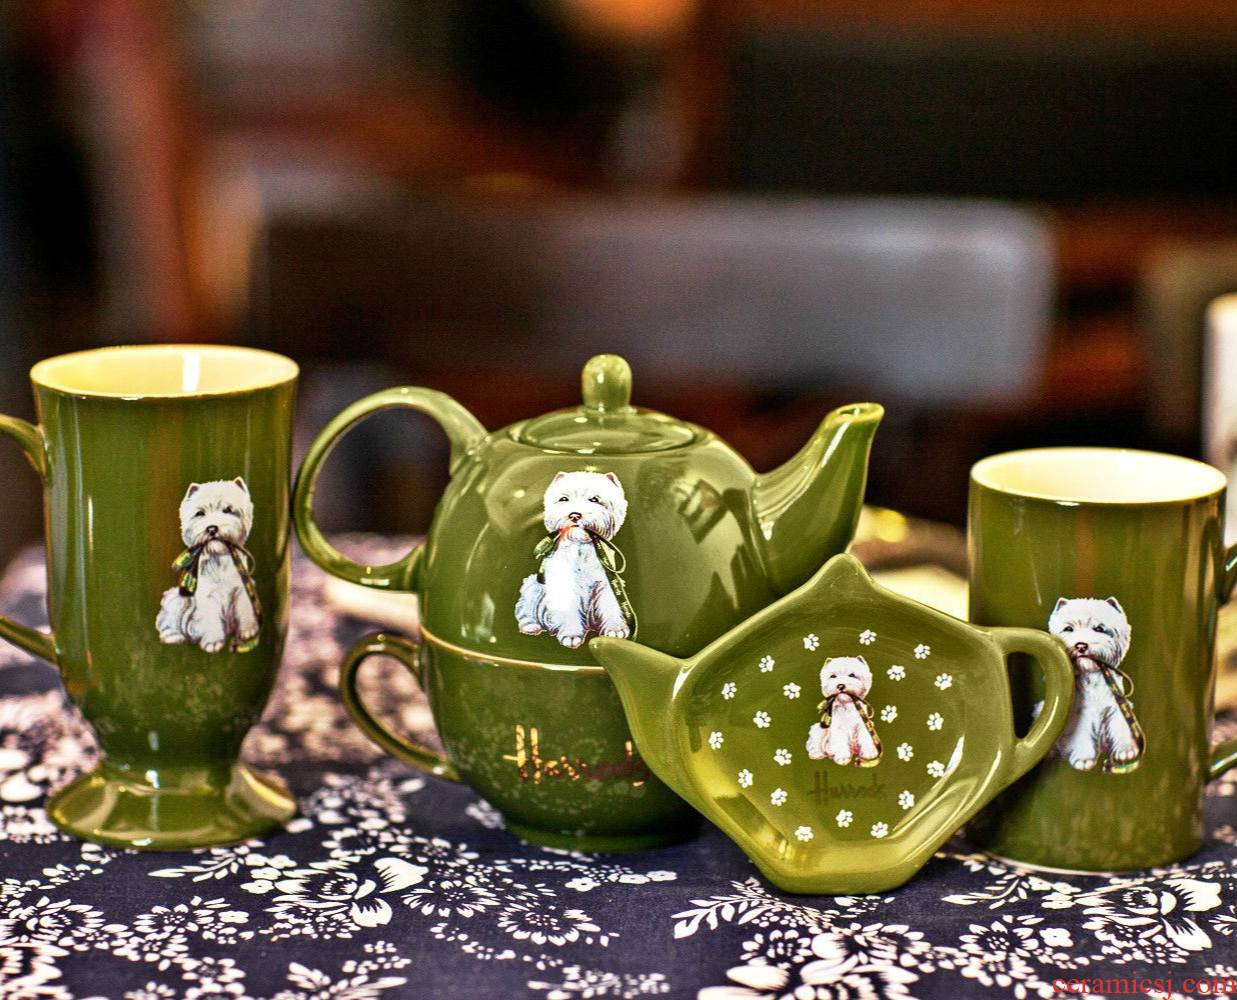 The harrods harrods ceramic cup mark cup couples cup teapot tea saucer west highland disc set